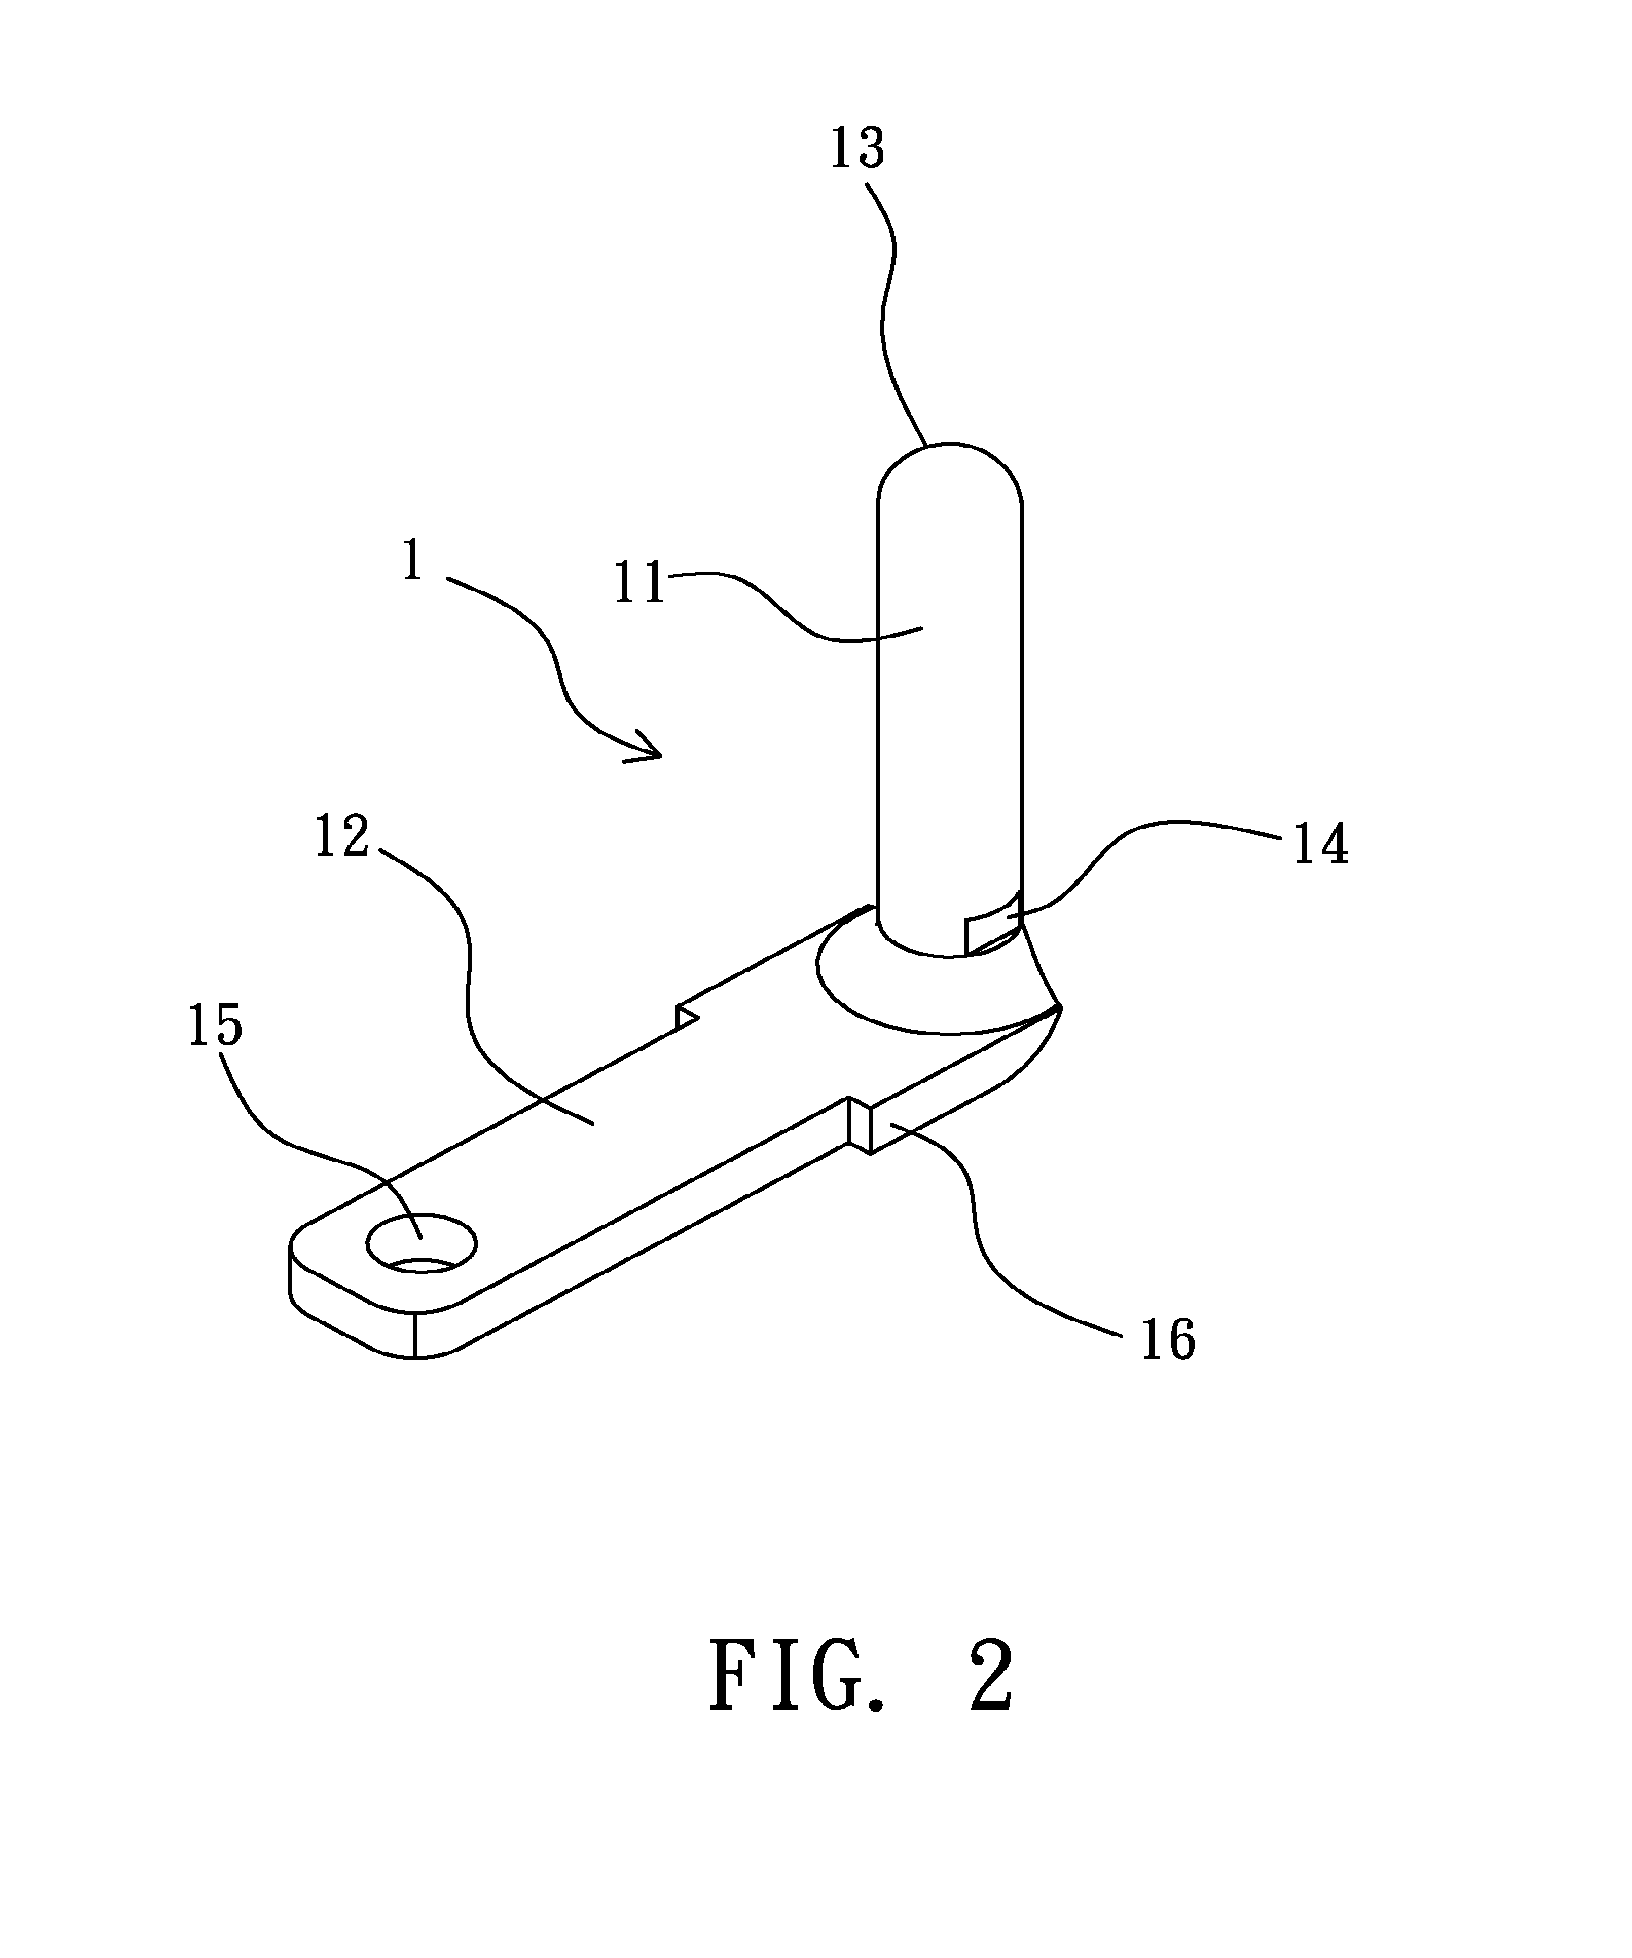 Method for manufacturing power socket